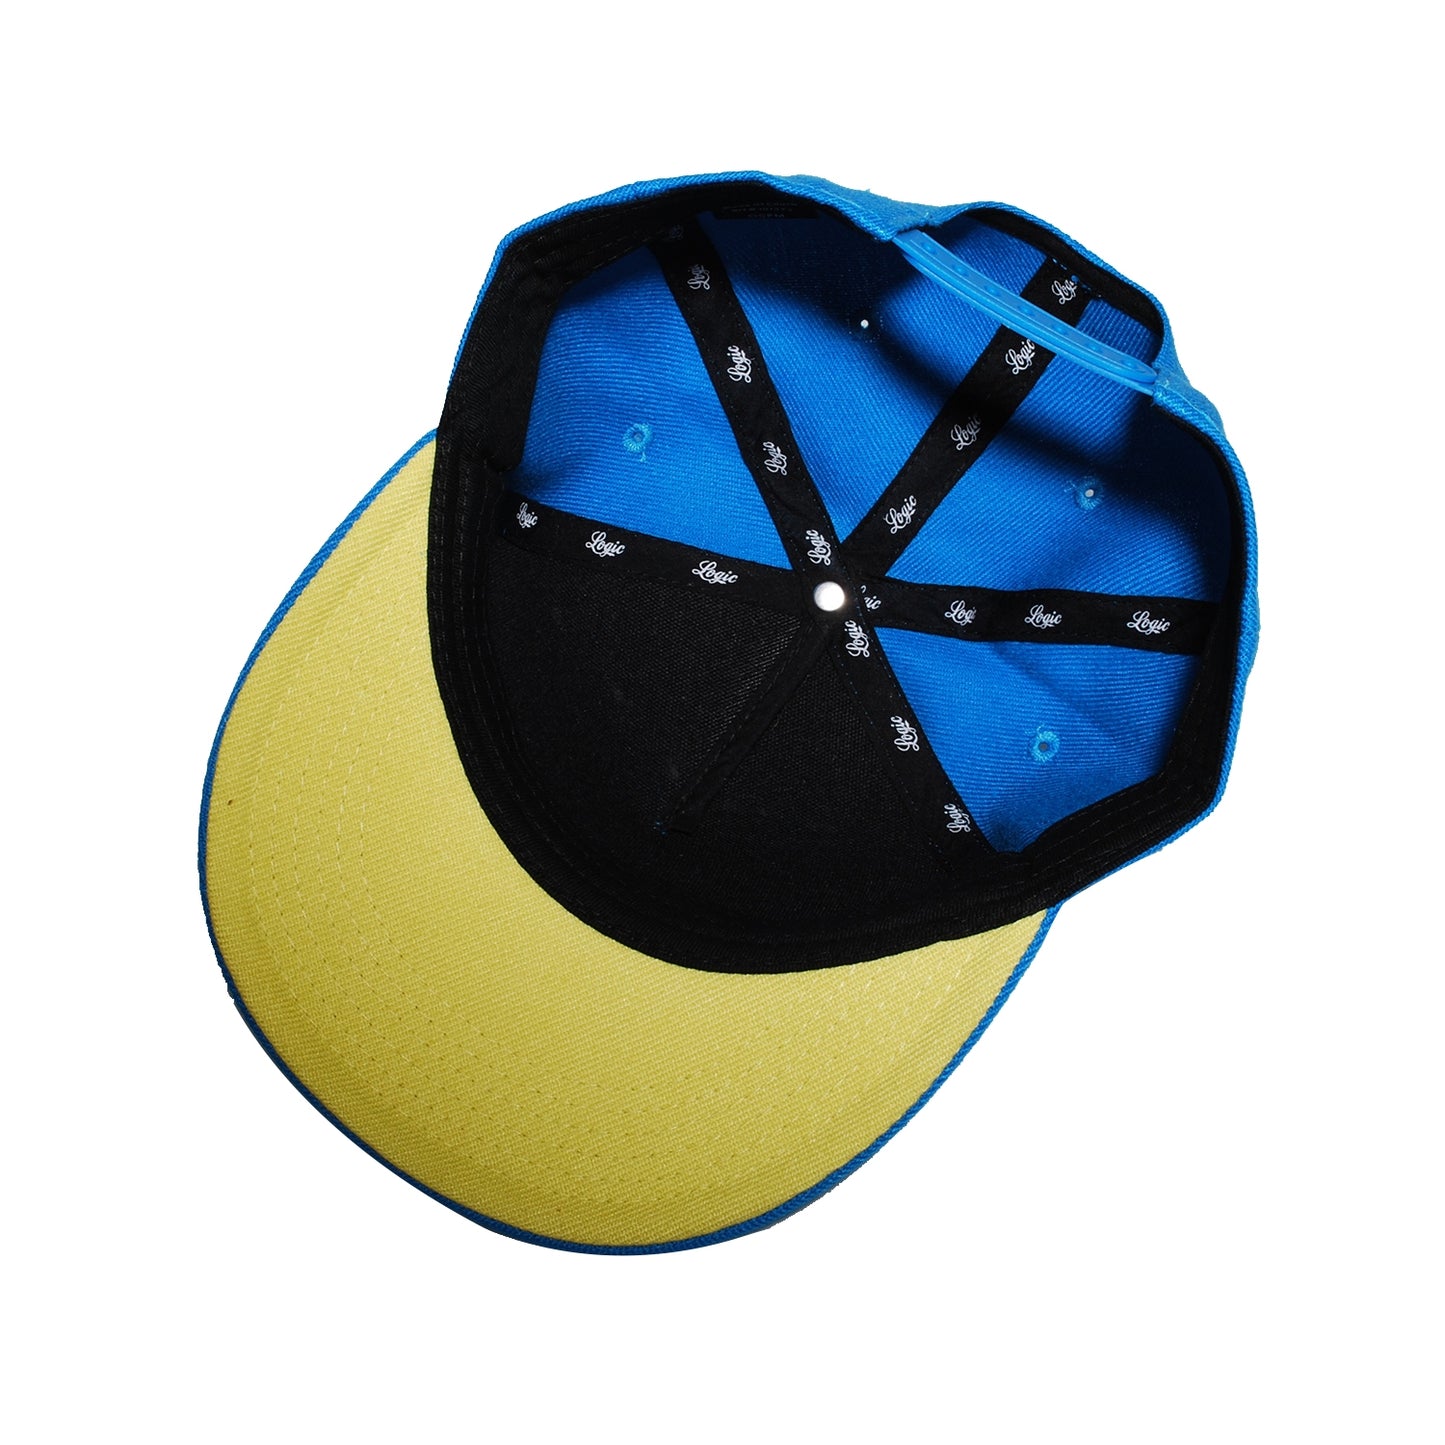 FLEX Custom Hat